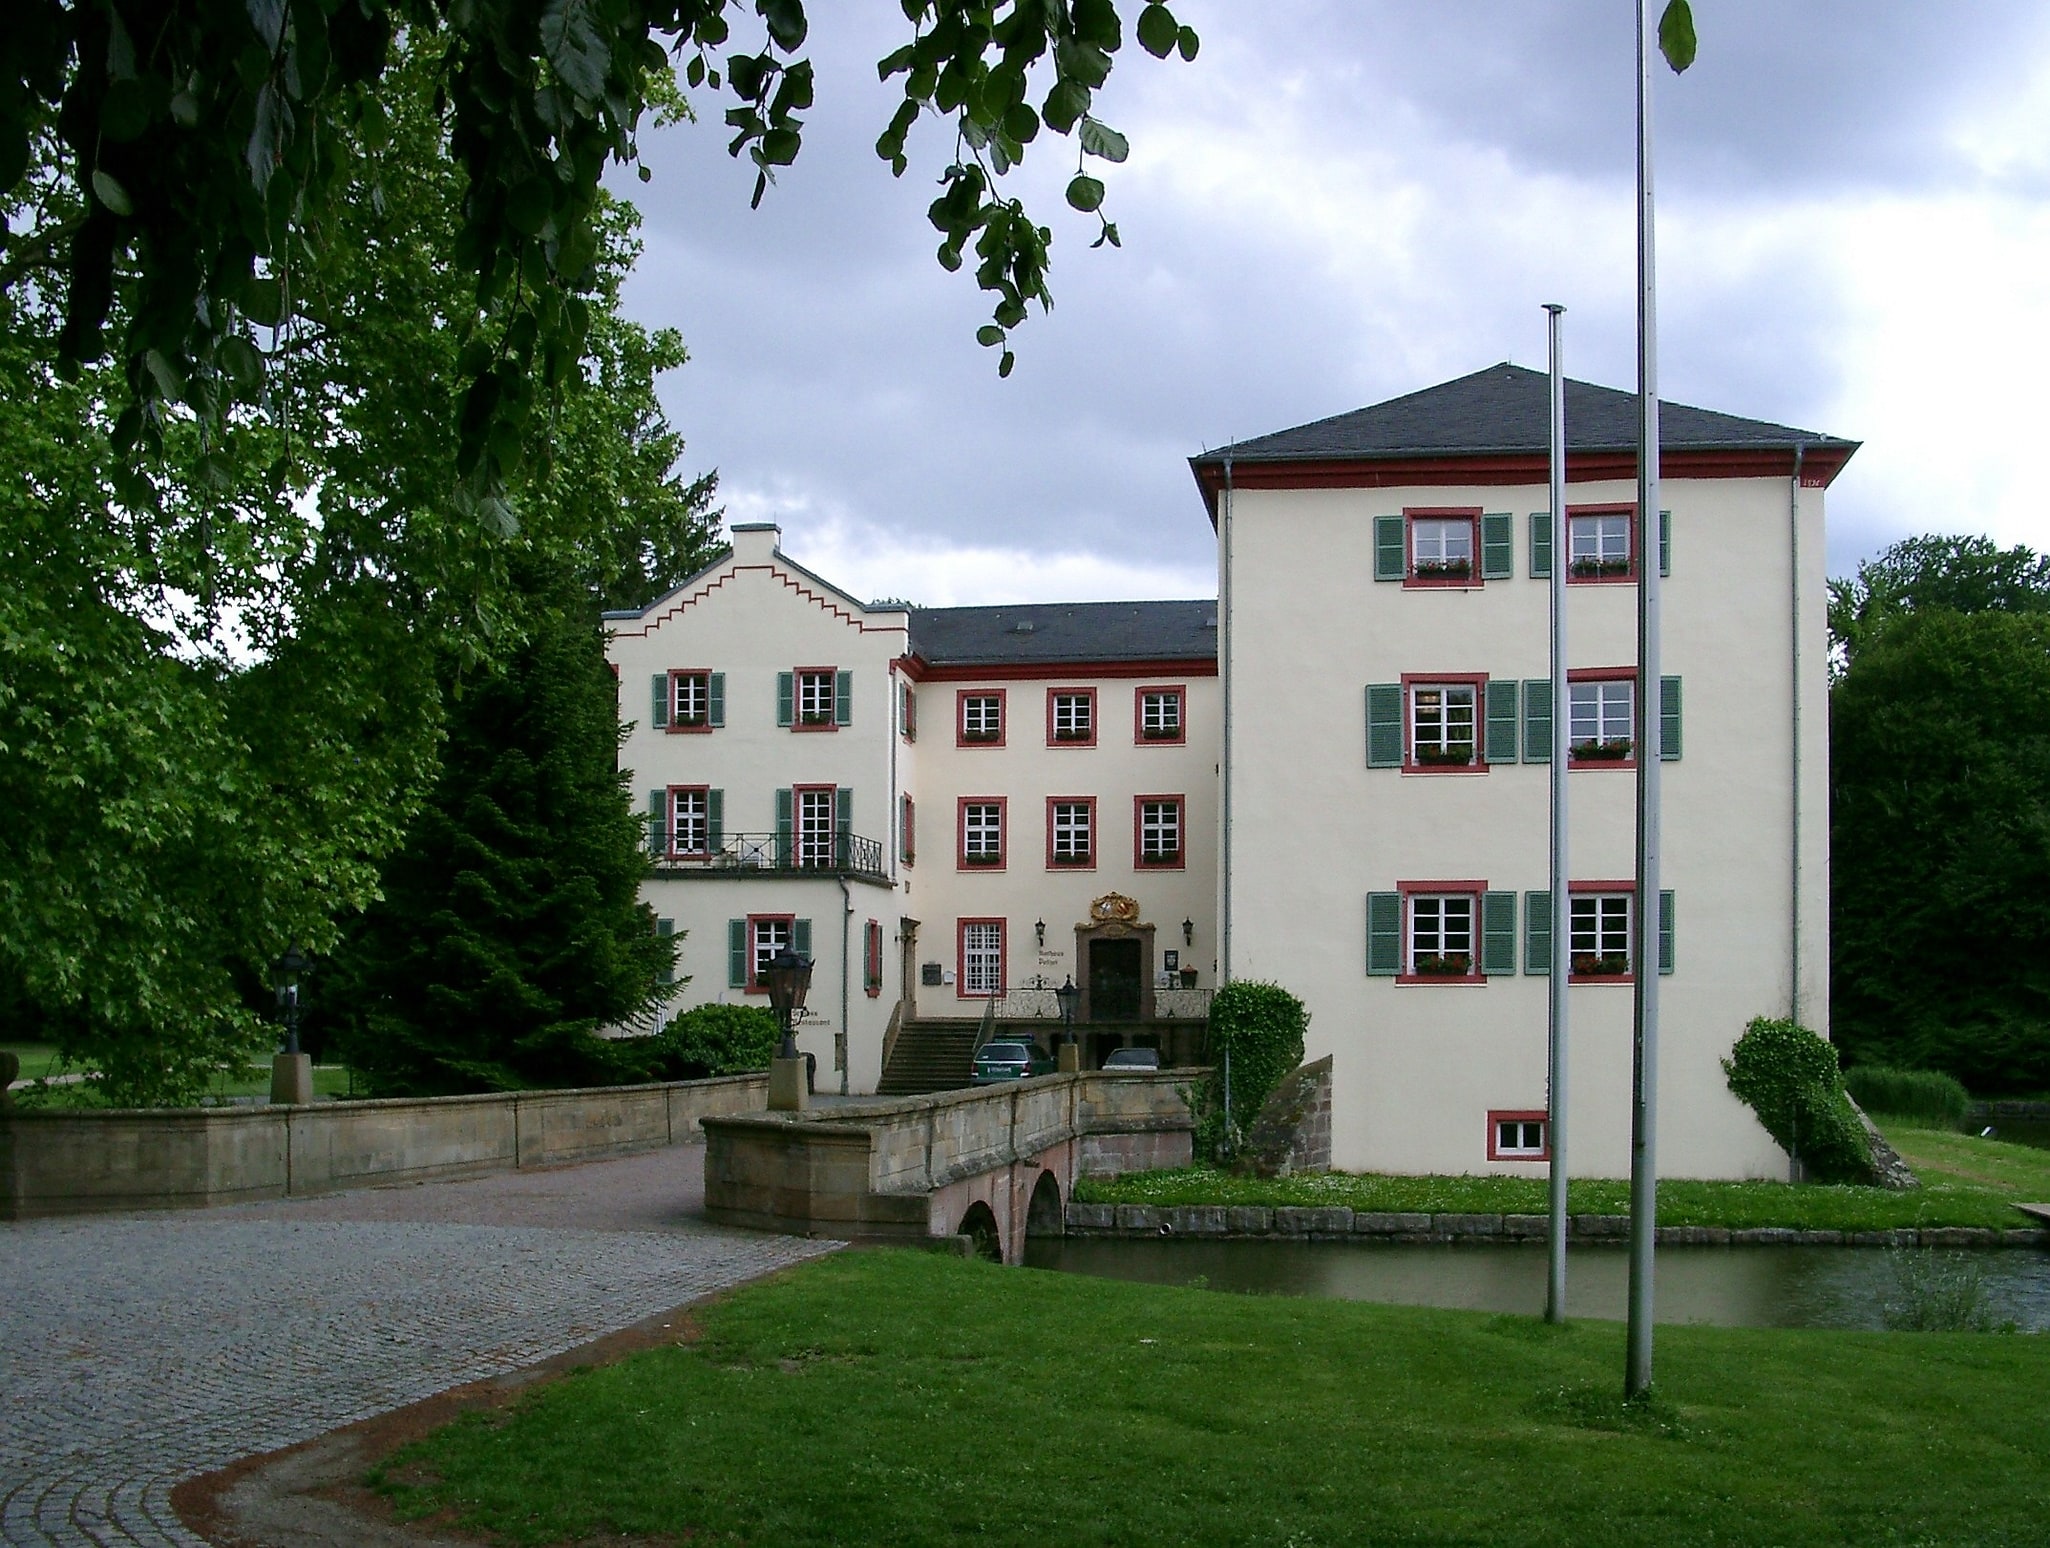 Angelbachtal, Germany